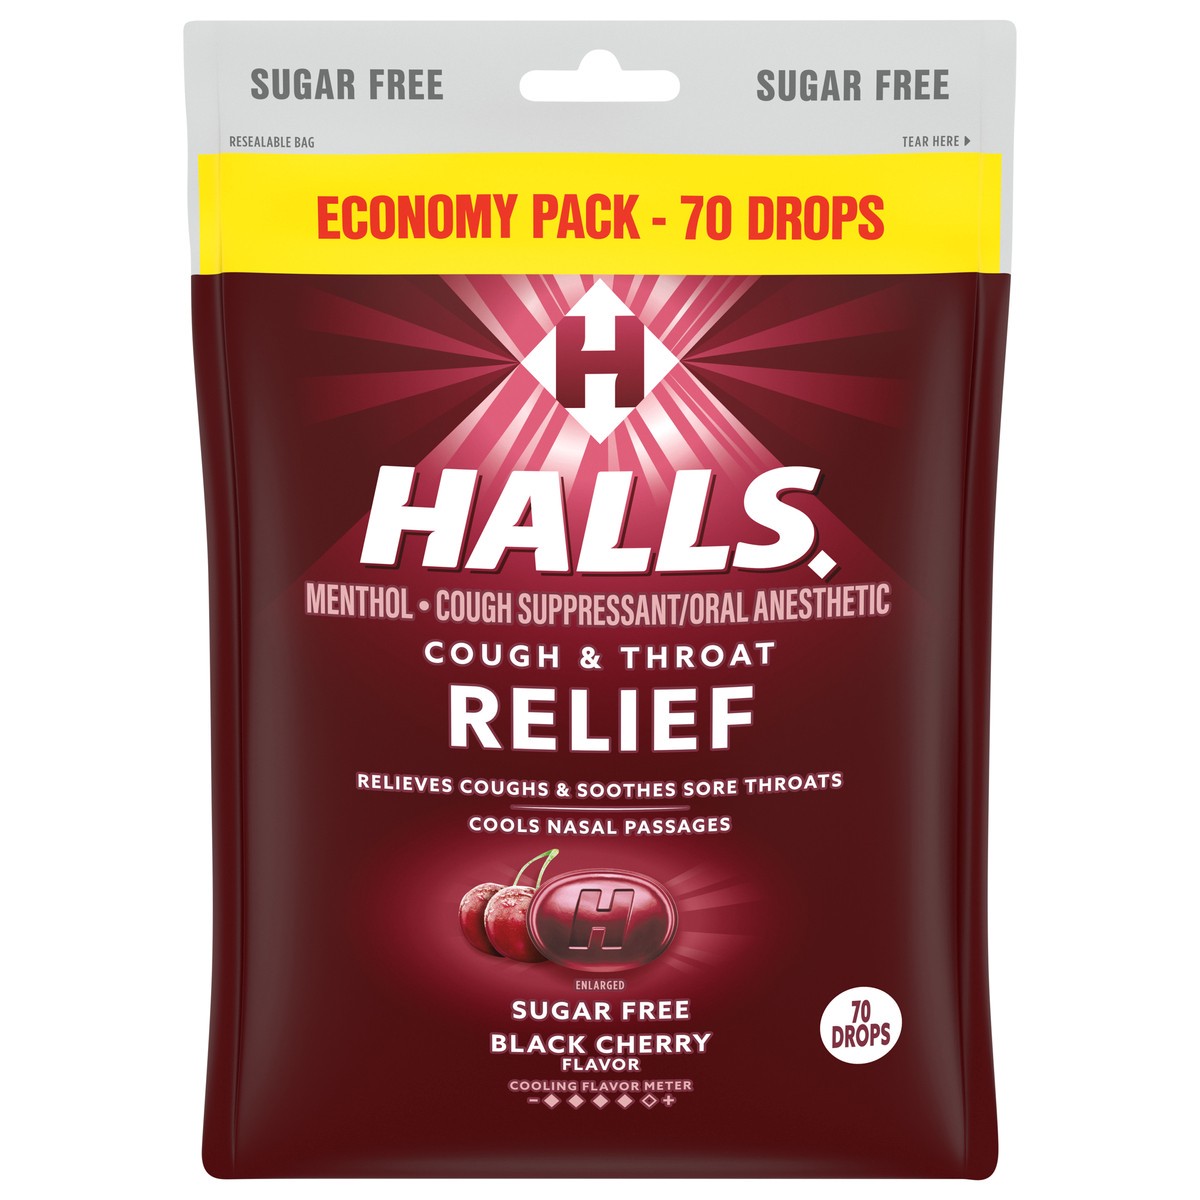 slide 1 of 8, HALLS Relief Sugar Free Black Cherry Flavor Cough Drops, Economy Pack, 1 Bag (70 Total Drops), 8.75 oz